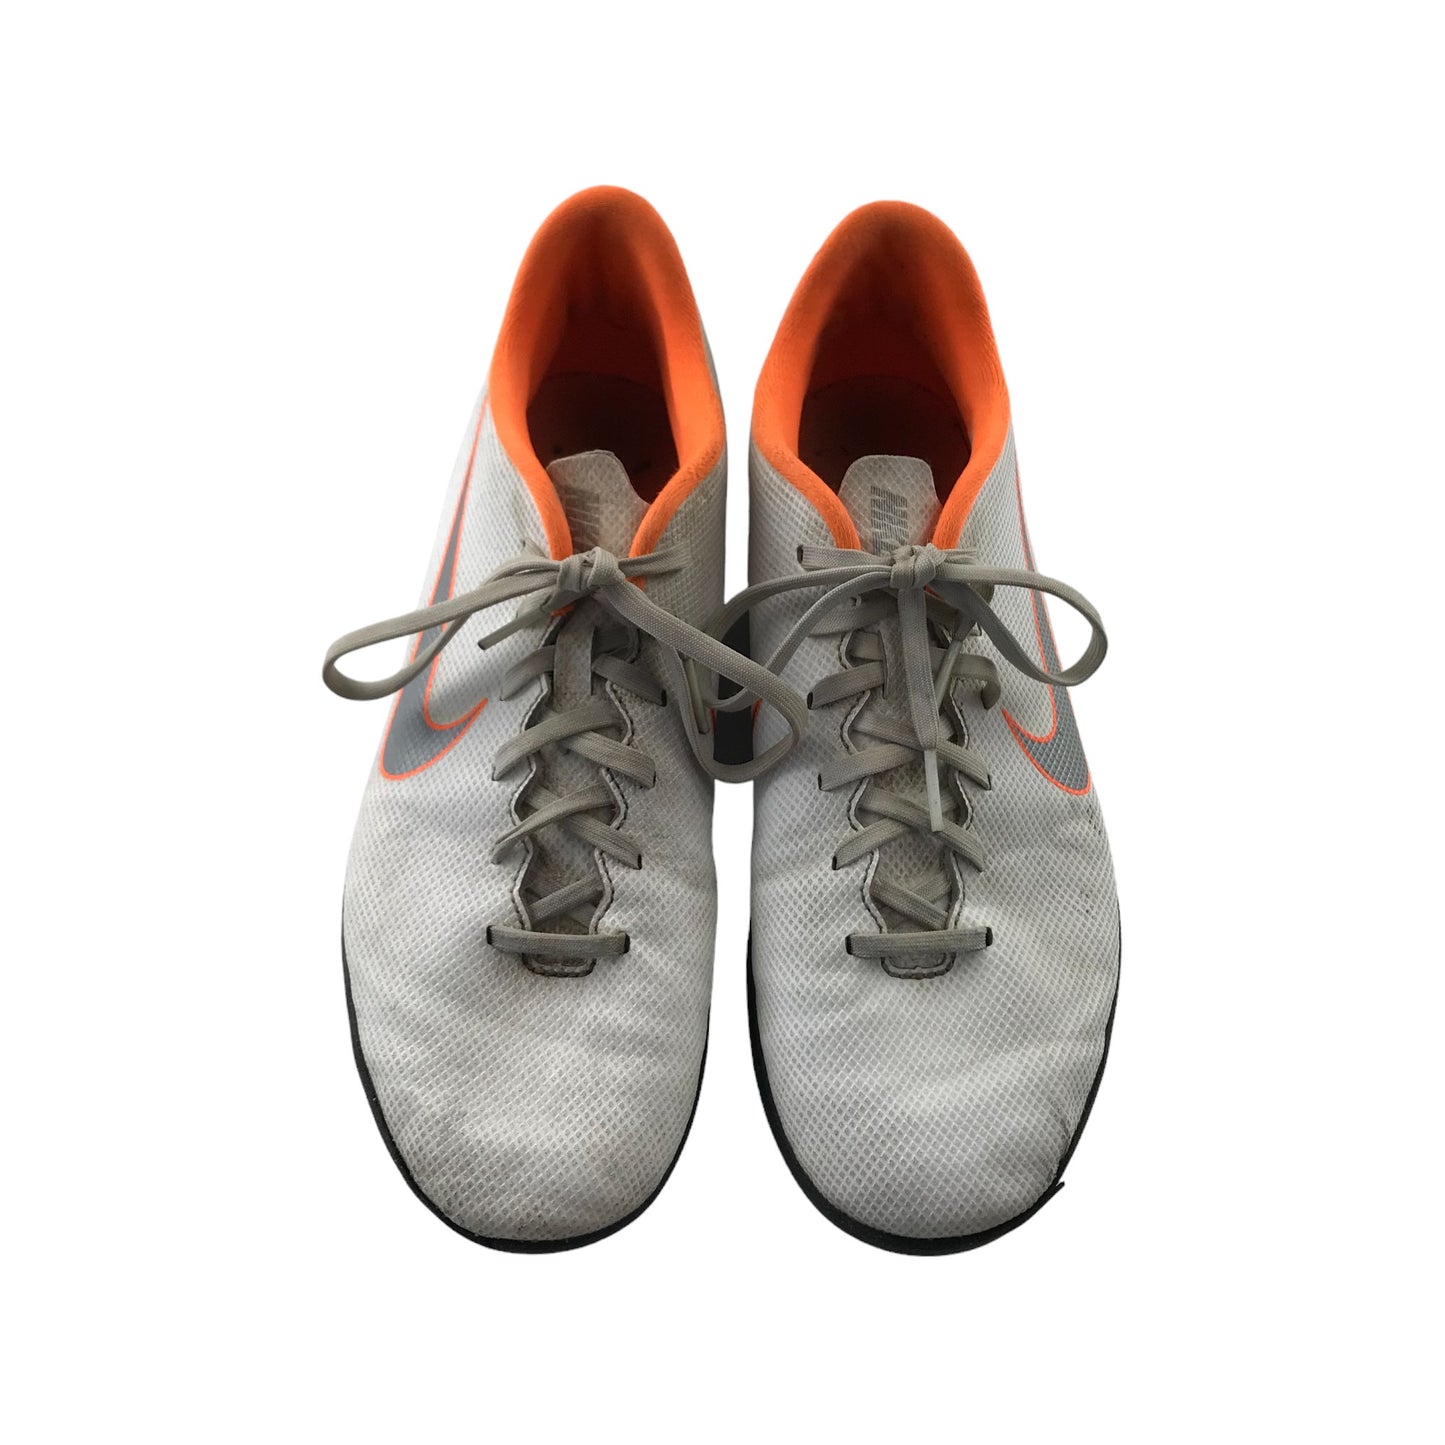 Nike Mercurial Astro Turf Football Boot Shoe Size 7 White and Orange